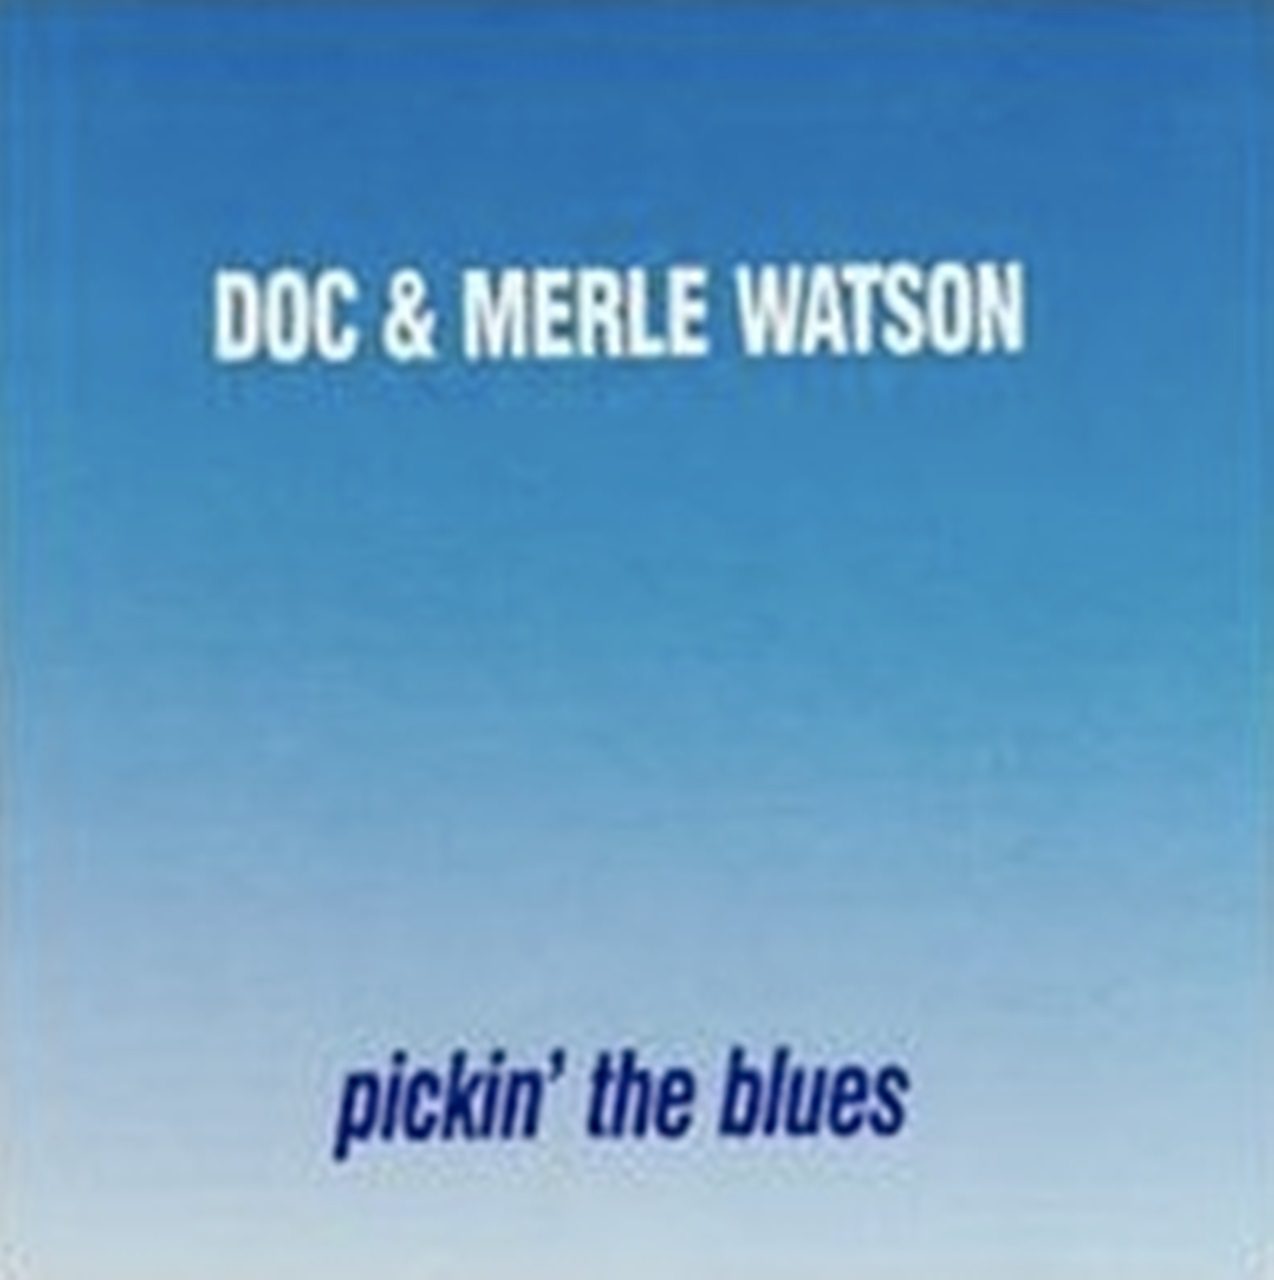 Doc & Merle Watson – Pickin' The Blues cover album